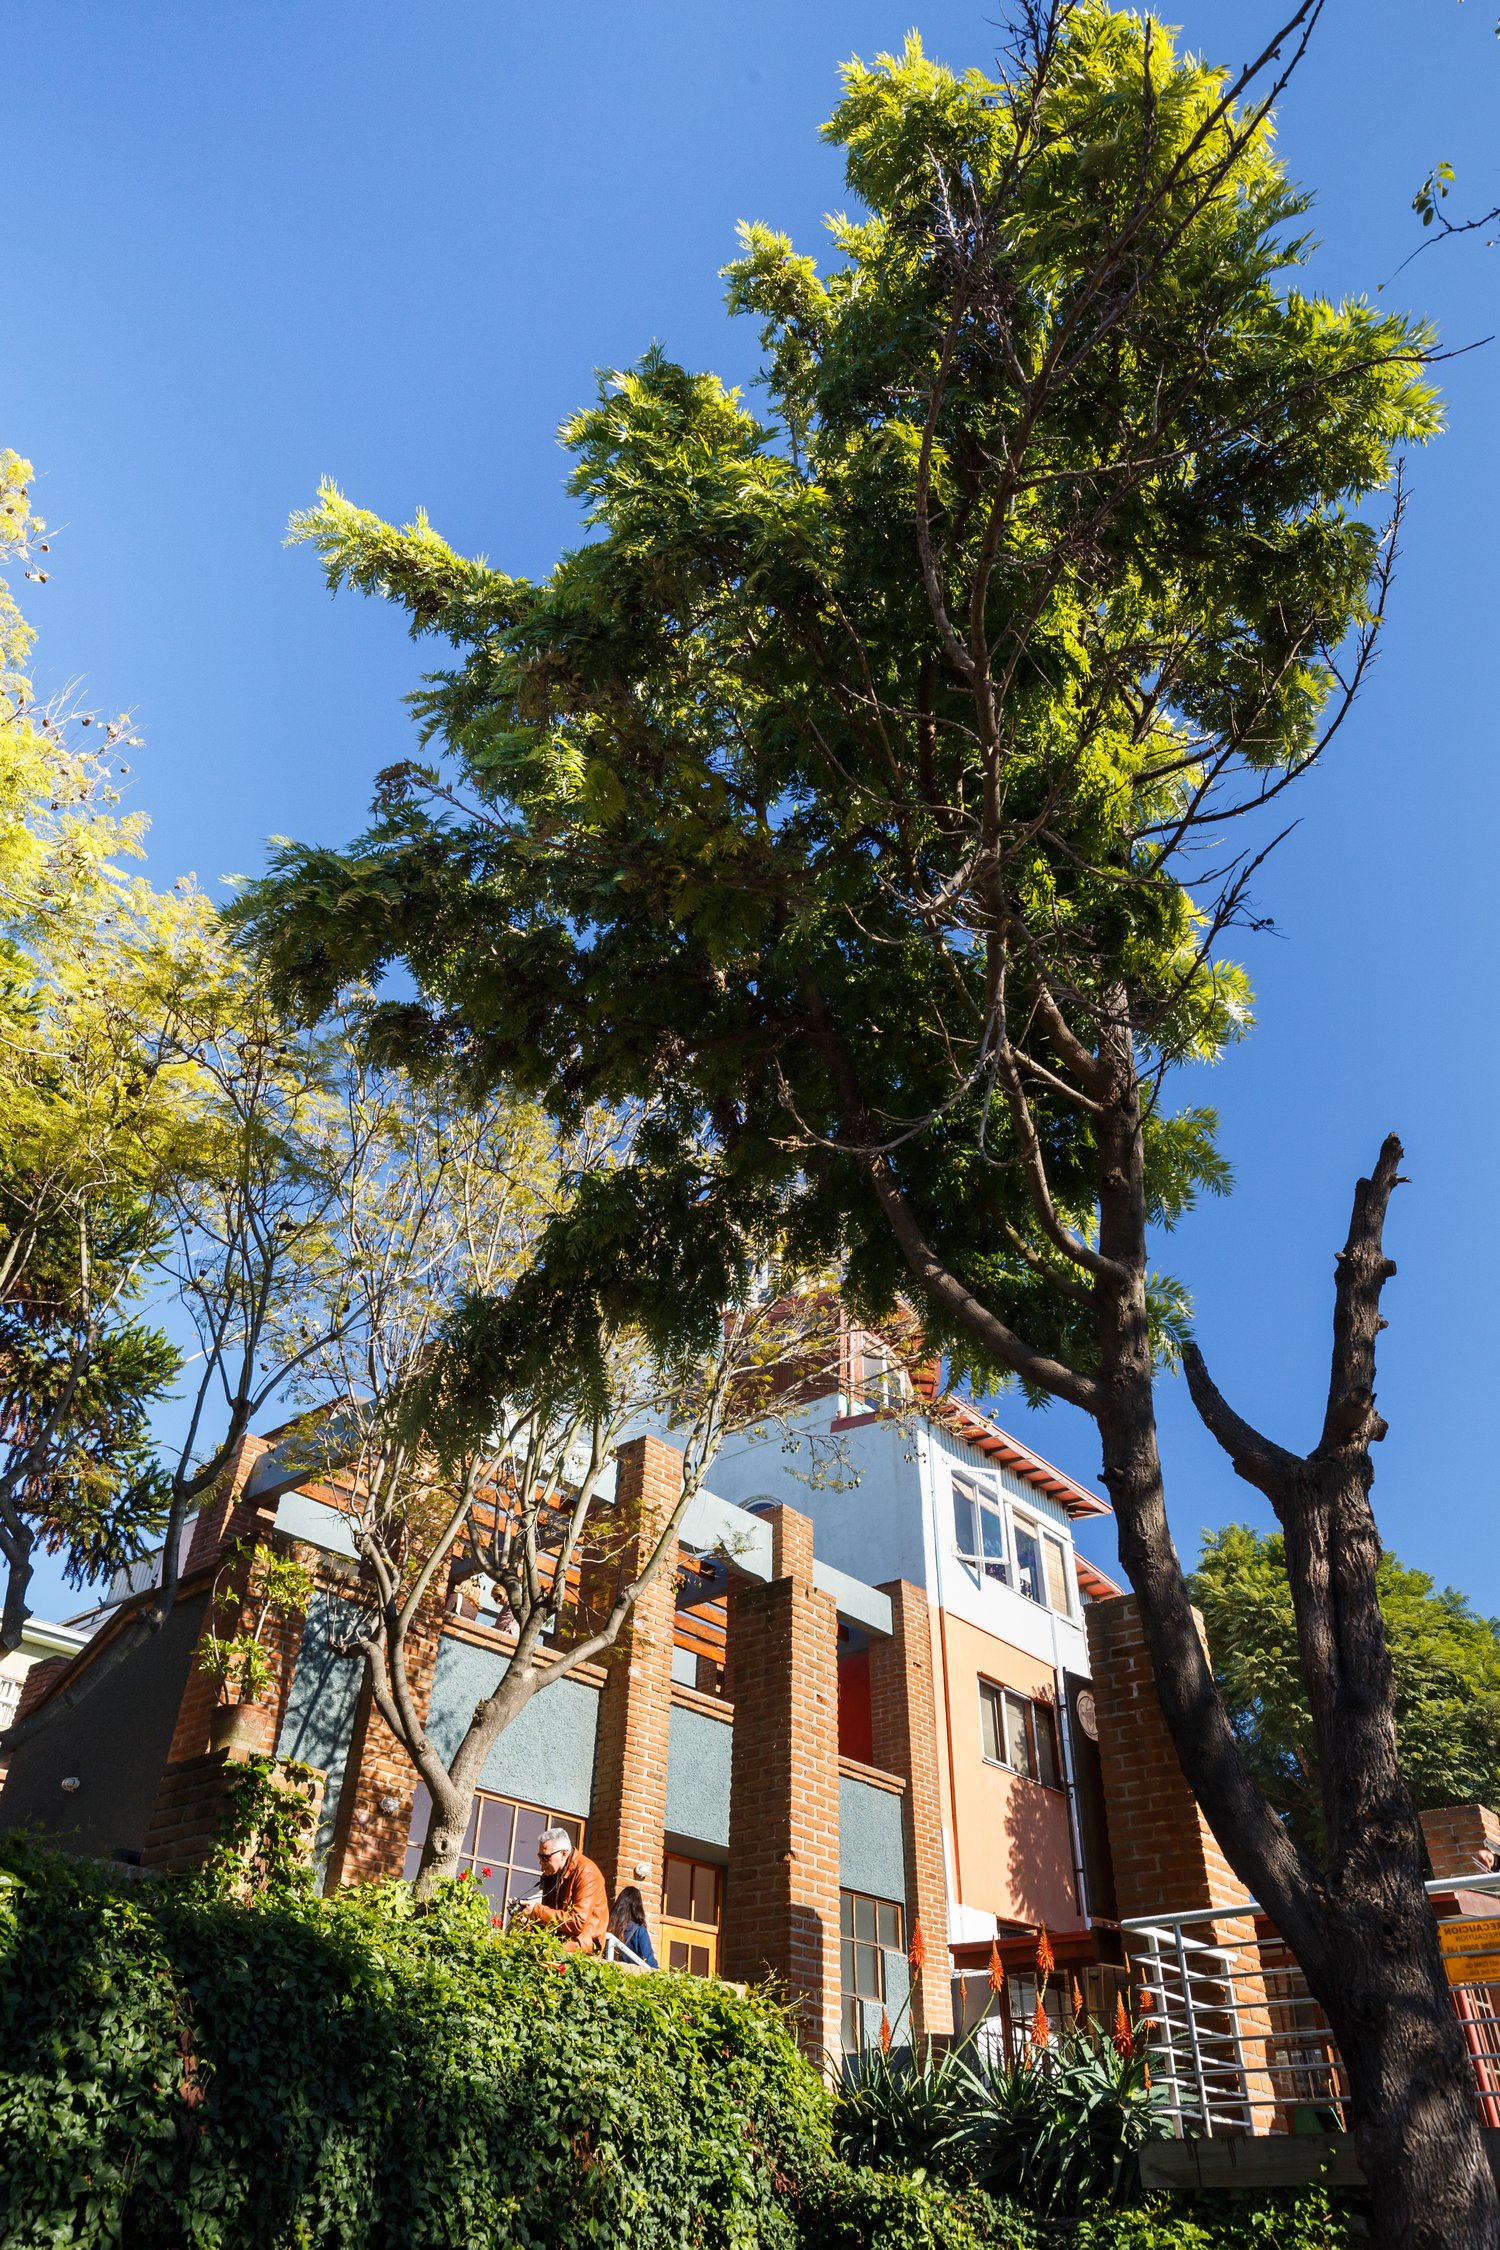 Casa La Sebastiana en Valparaíso del poeta Pablo Neruda